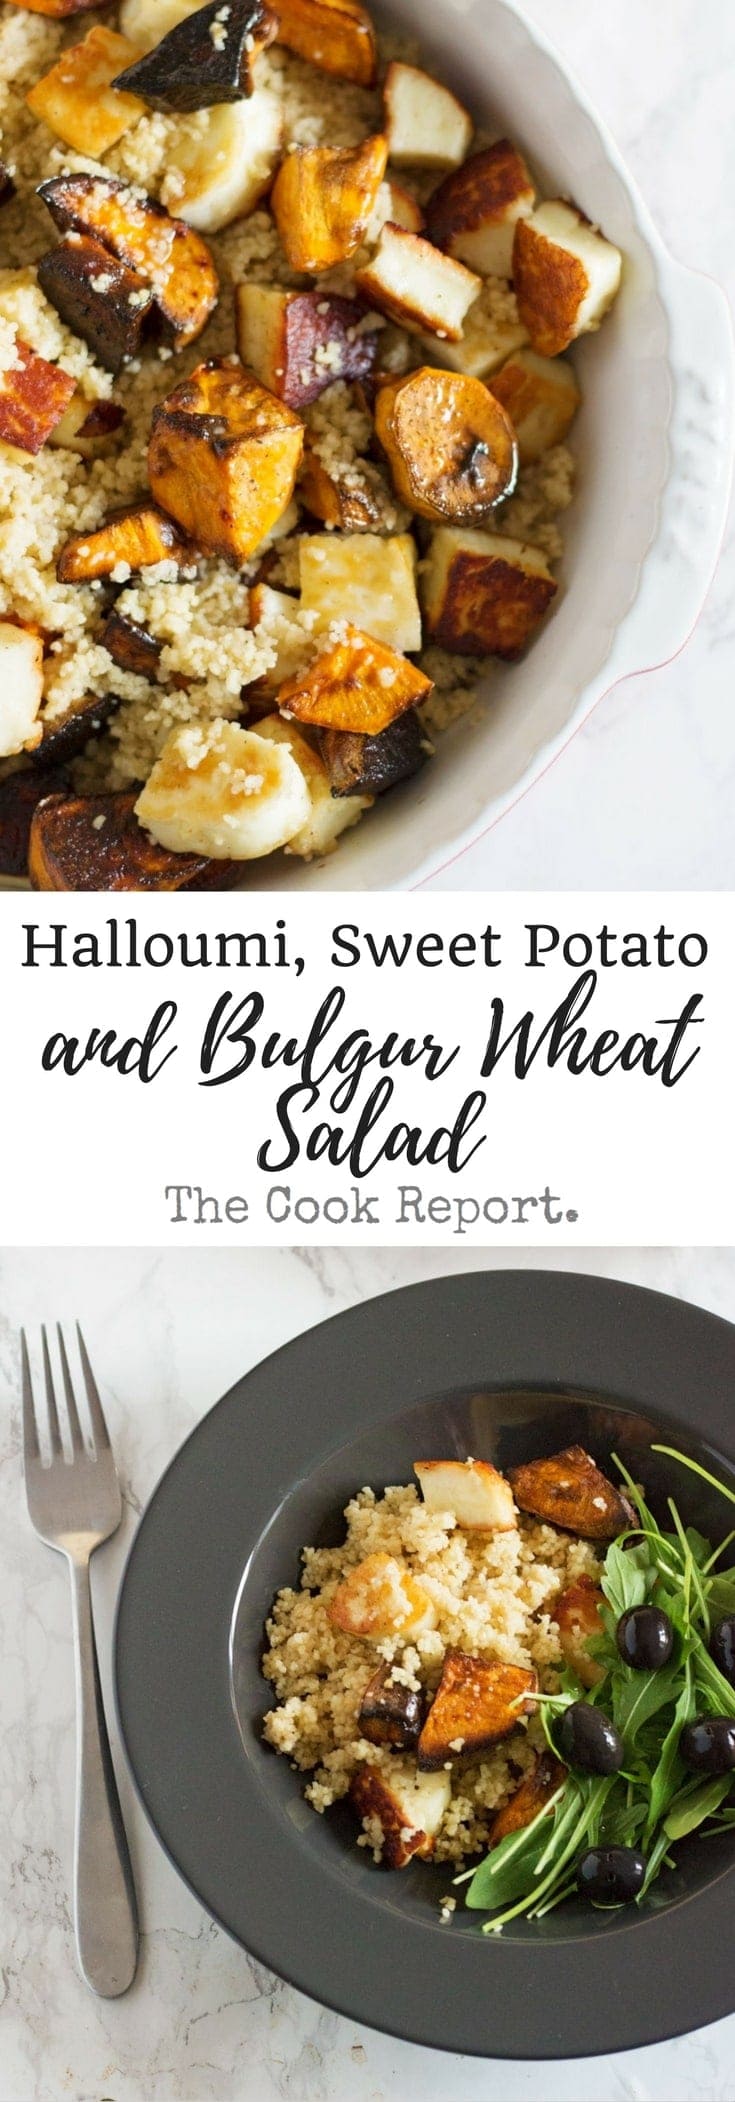 This vibrant halloumi, sweet potato and bulgur wheat salad is full of saltiness from the halloumi and olives and creamy sweetness from the sweet potato.